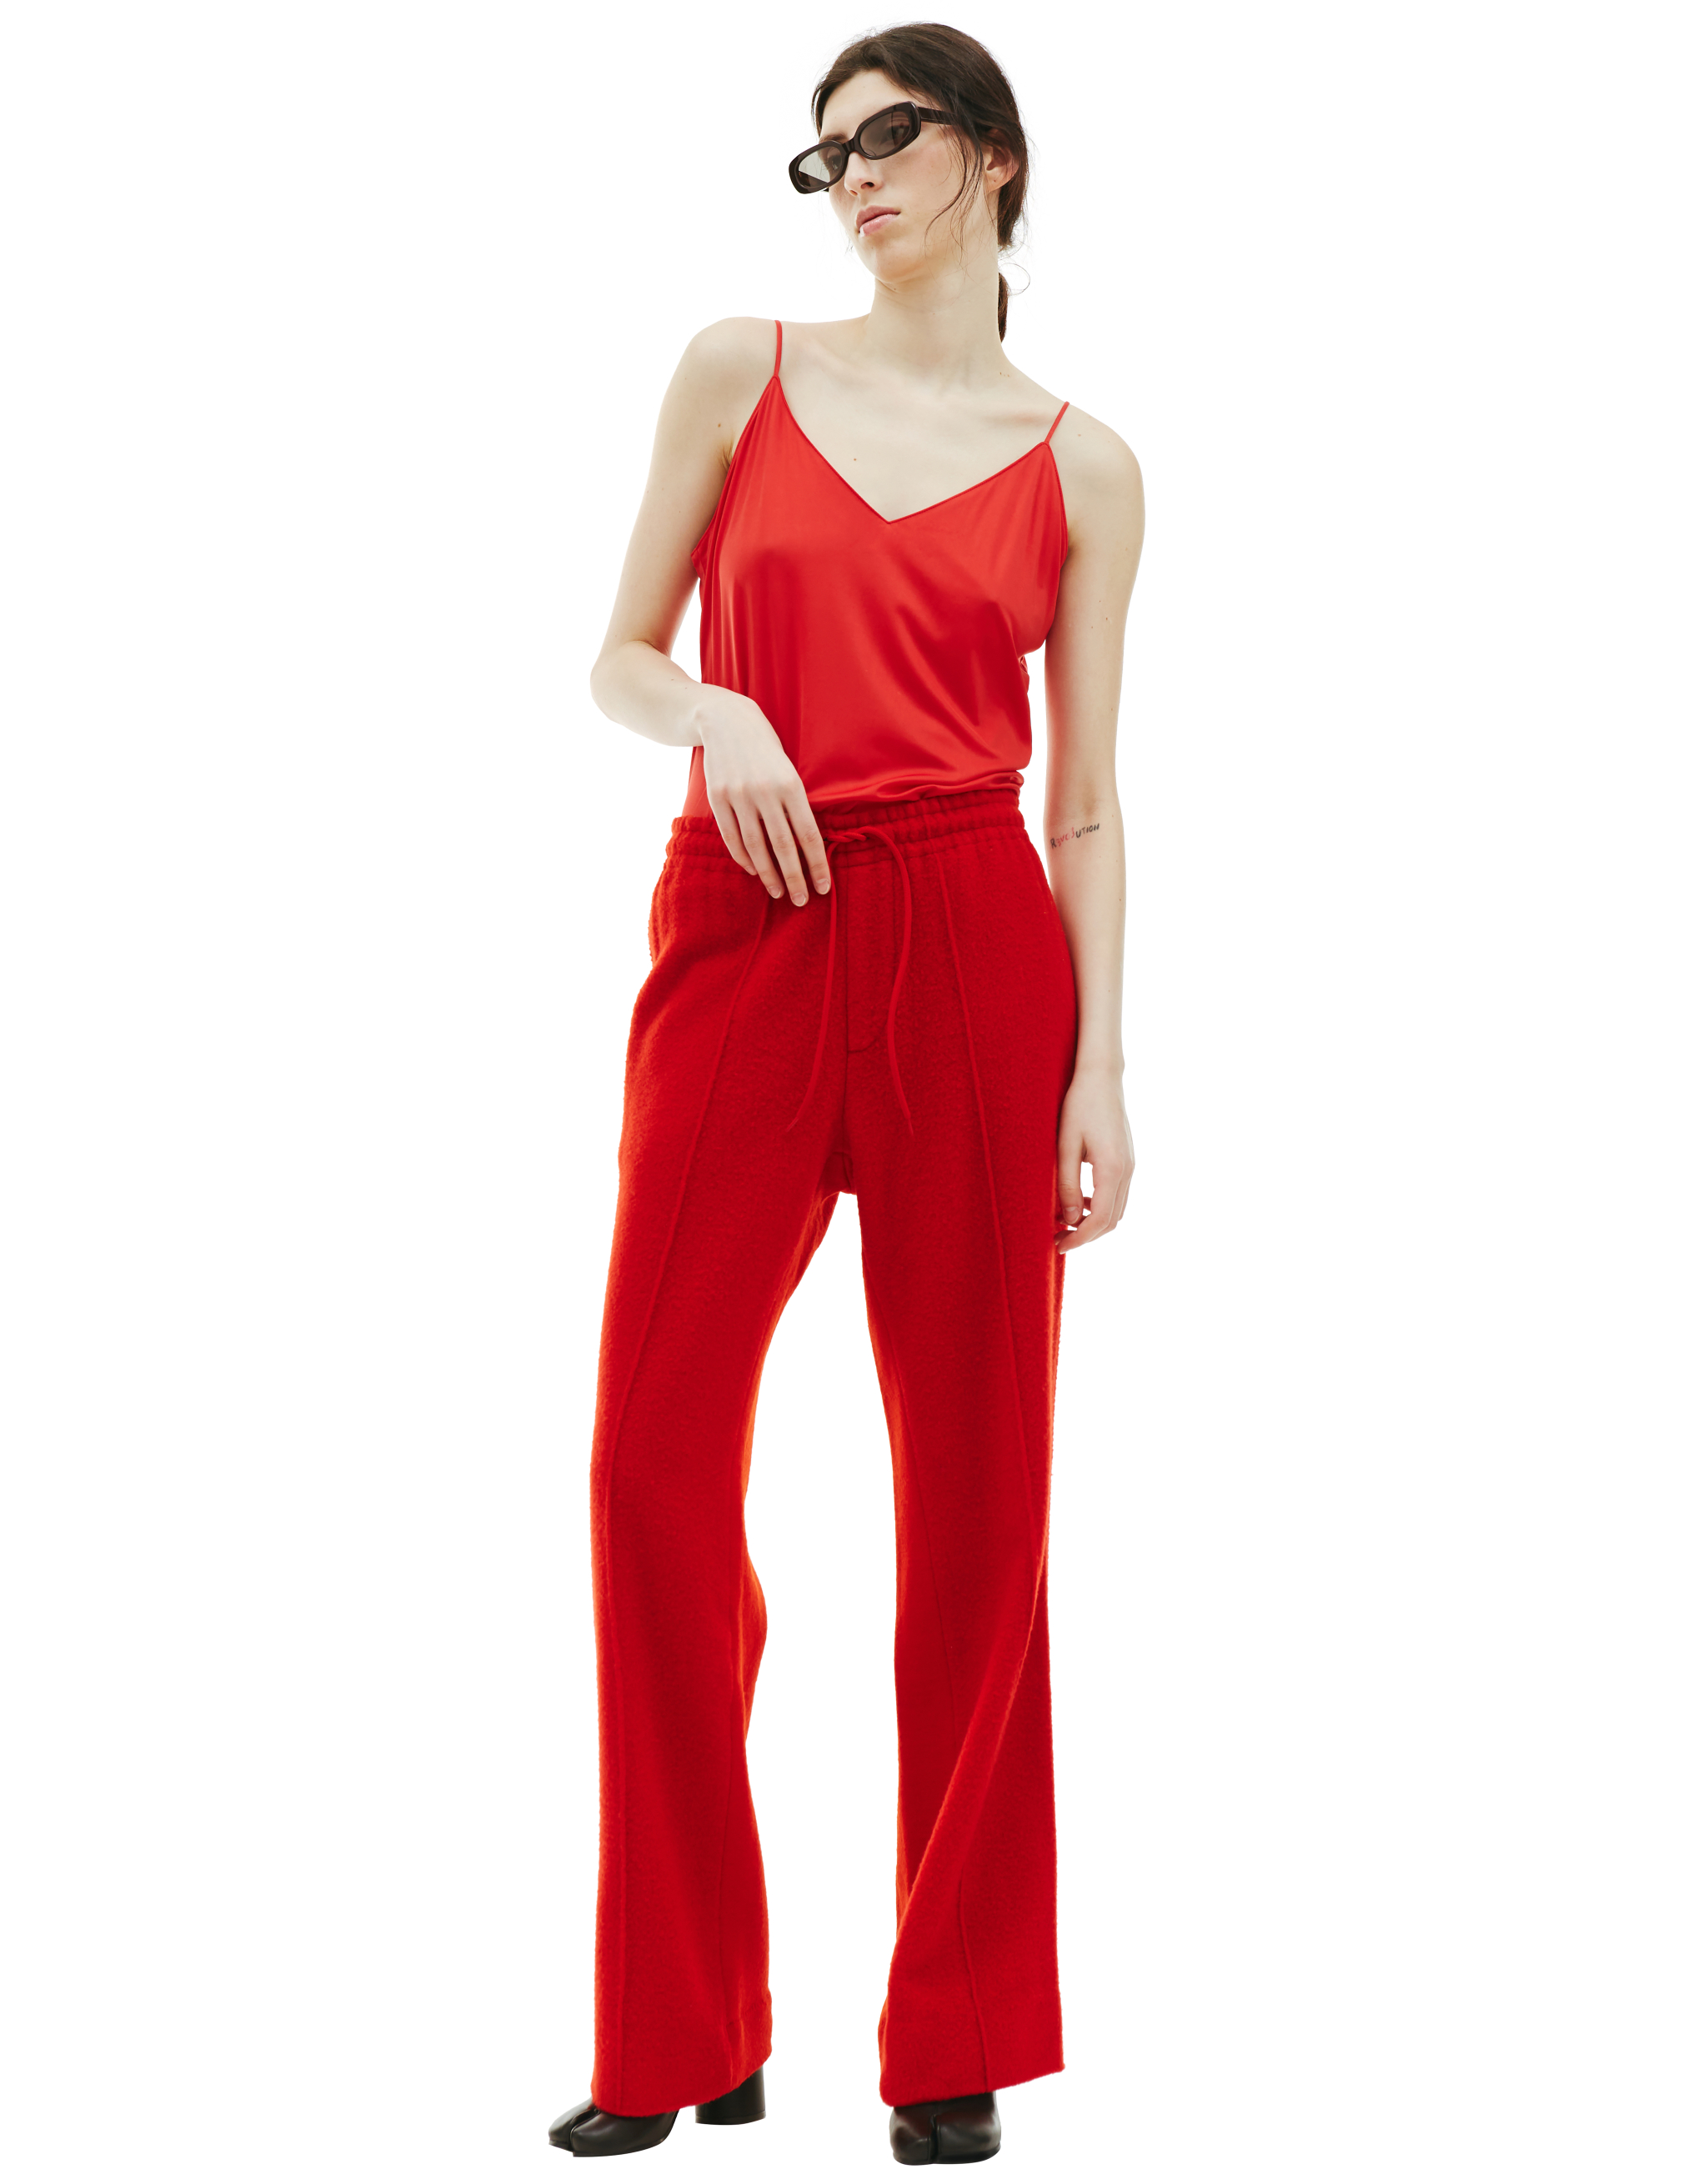 Красные шерстяные брюки Undercover UCX1503/red, размер 3;2 UCX1503/red - фото 1